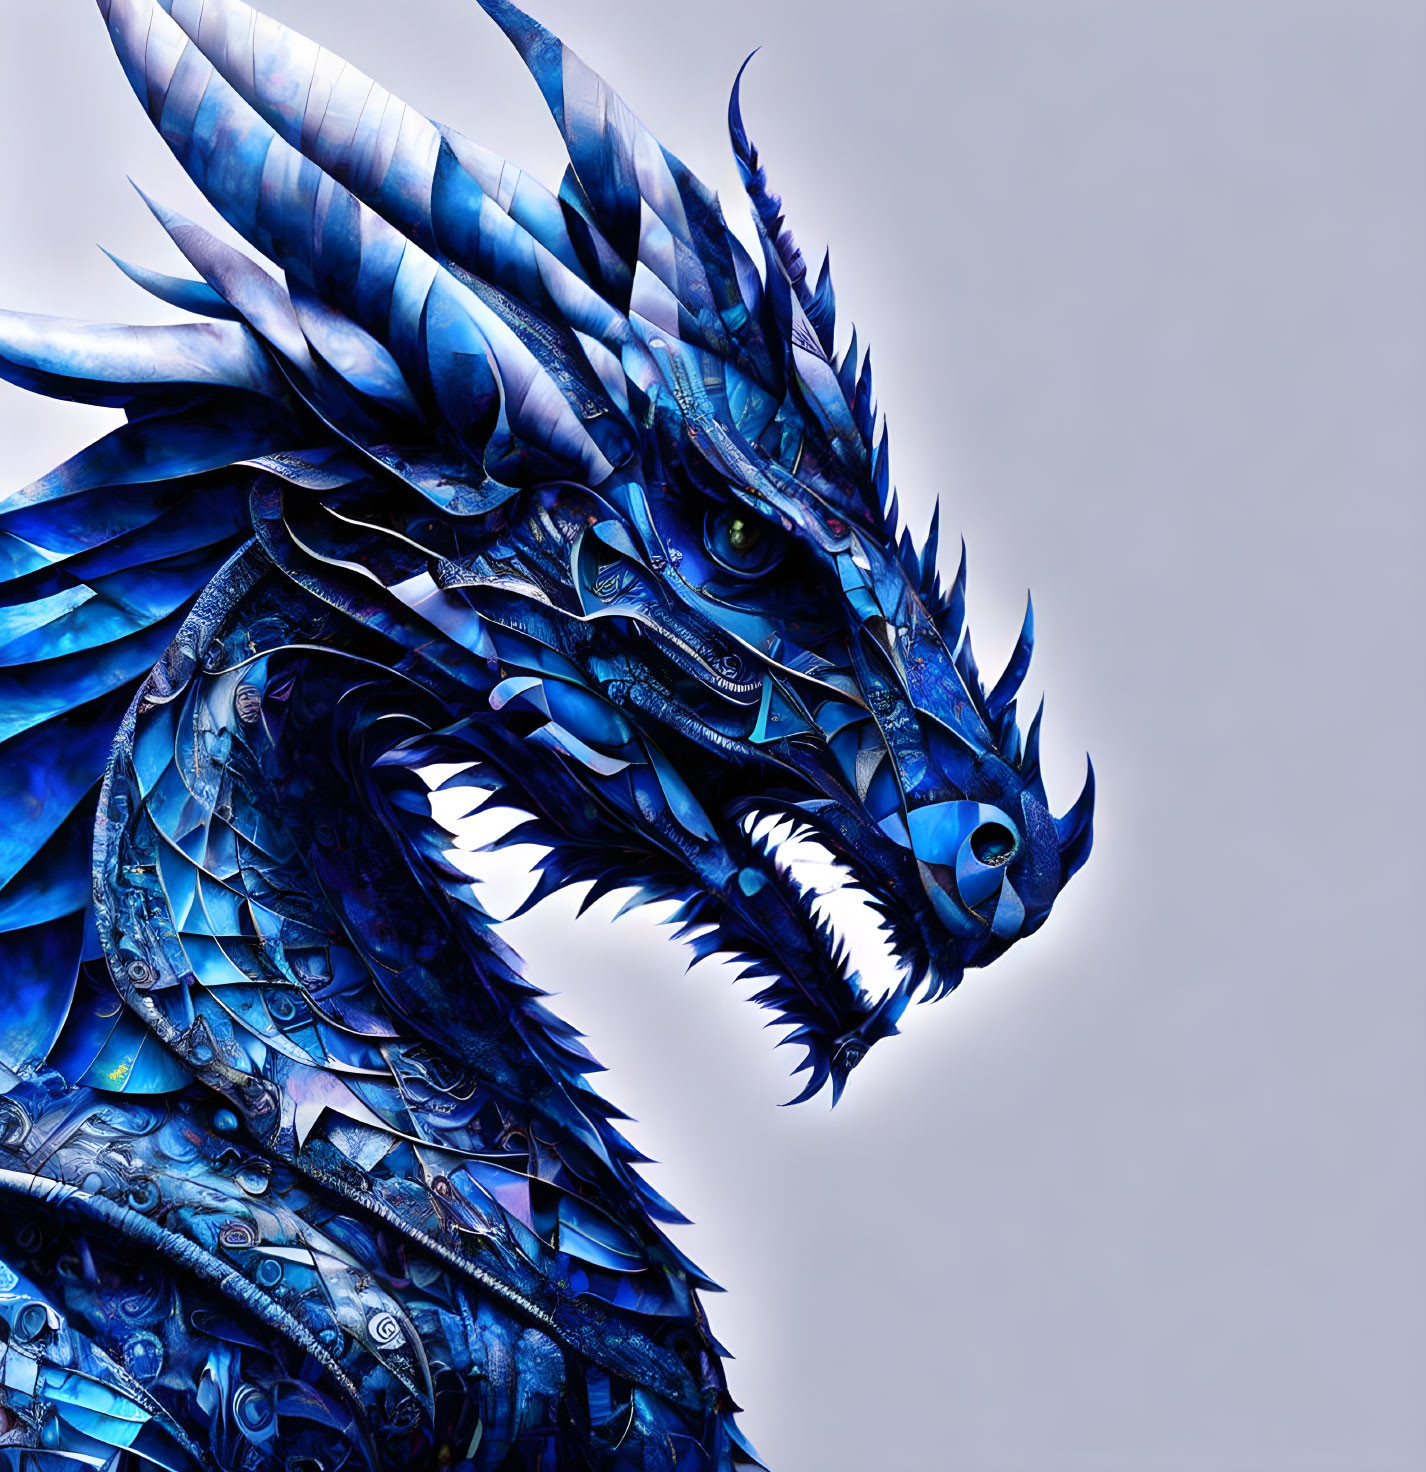 Blue Mechanical Dragon Head with Metallic Scales and Menacing Teeth